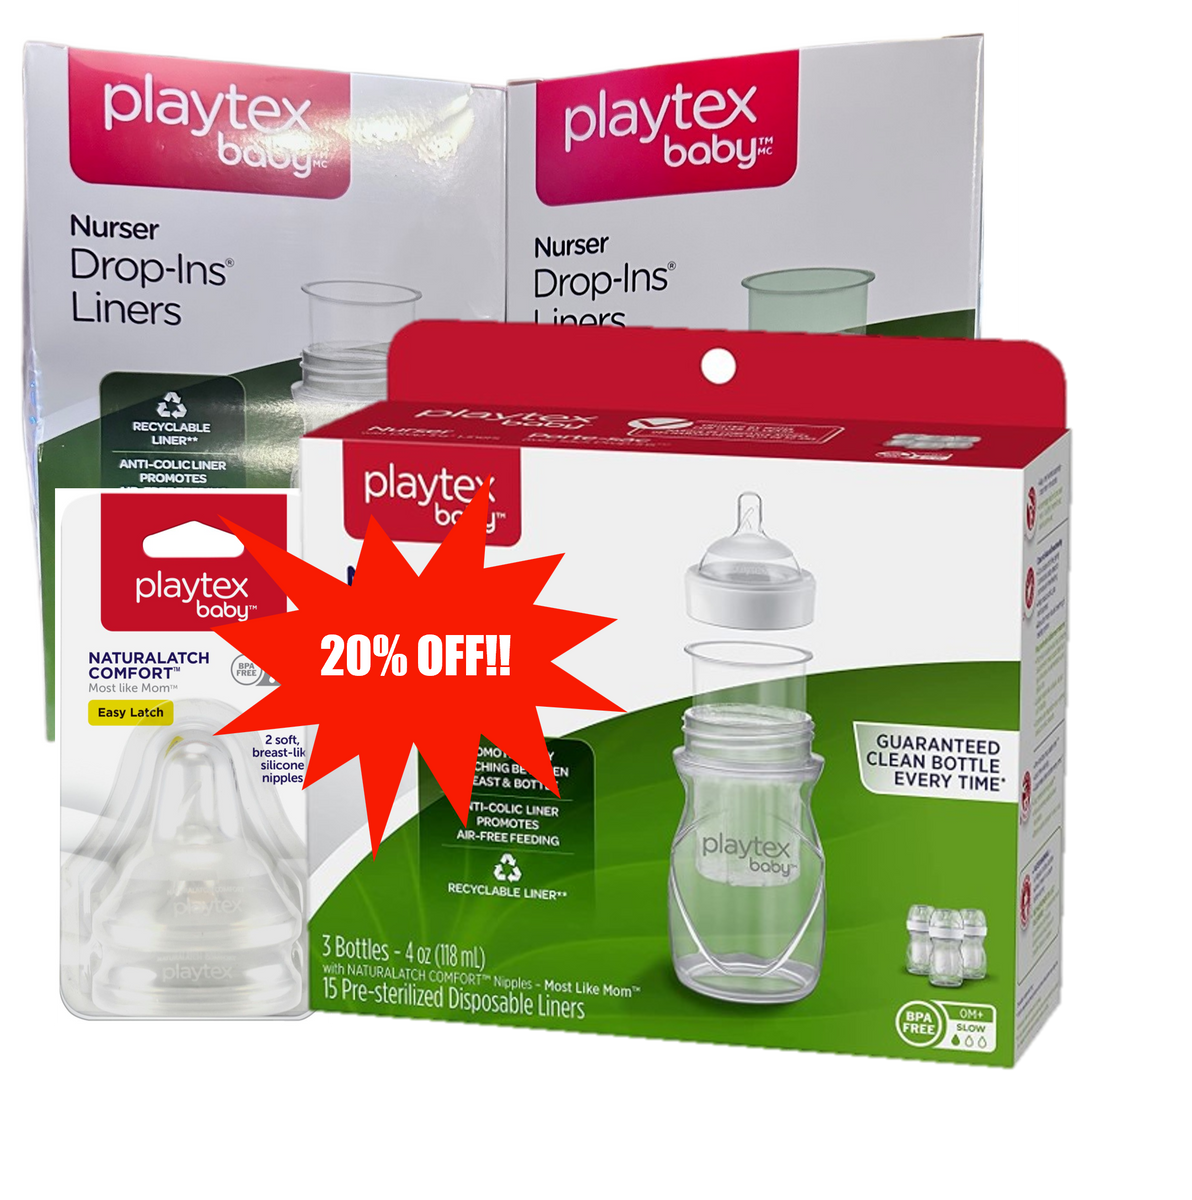 Playtex  Nursing Necessities Manual Breast Pump Set (Parallel